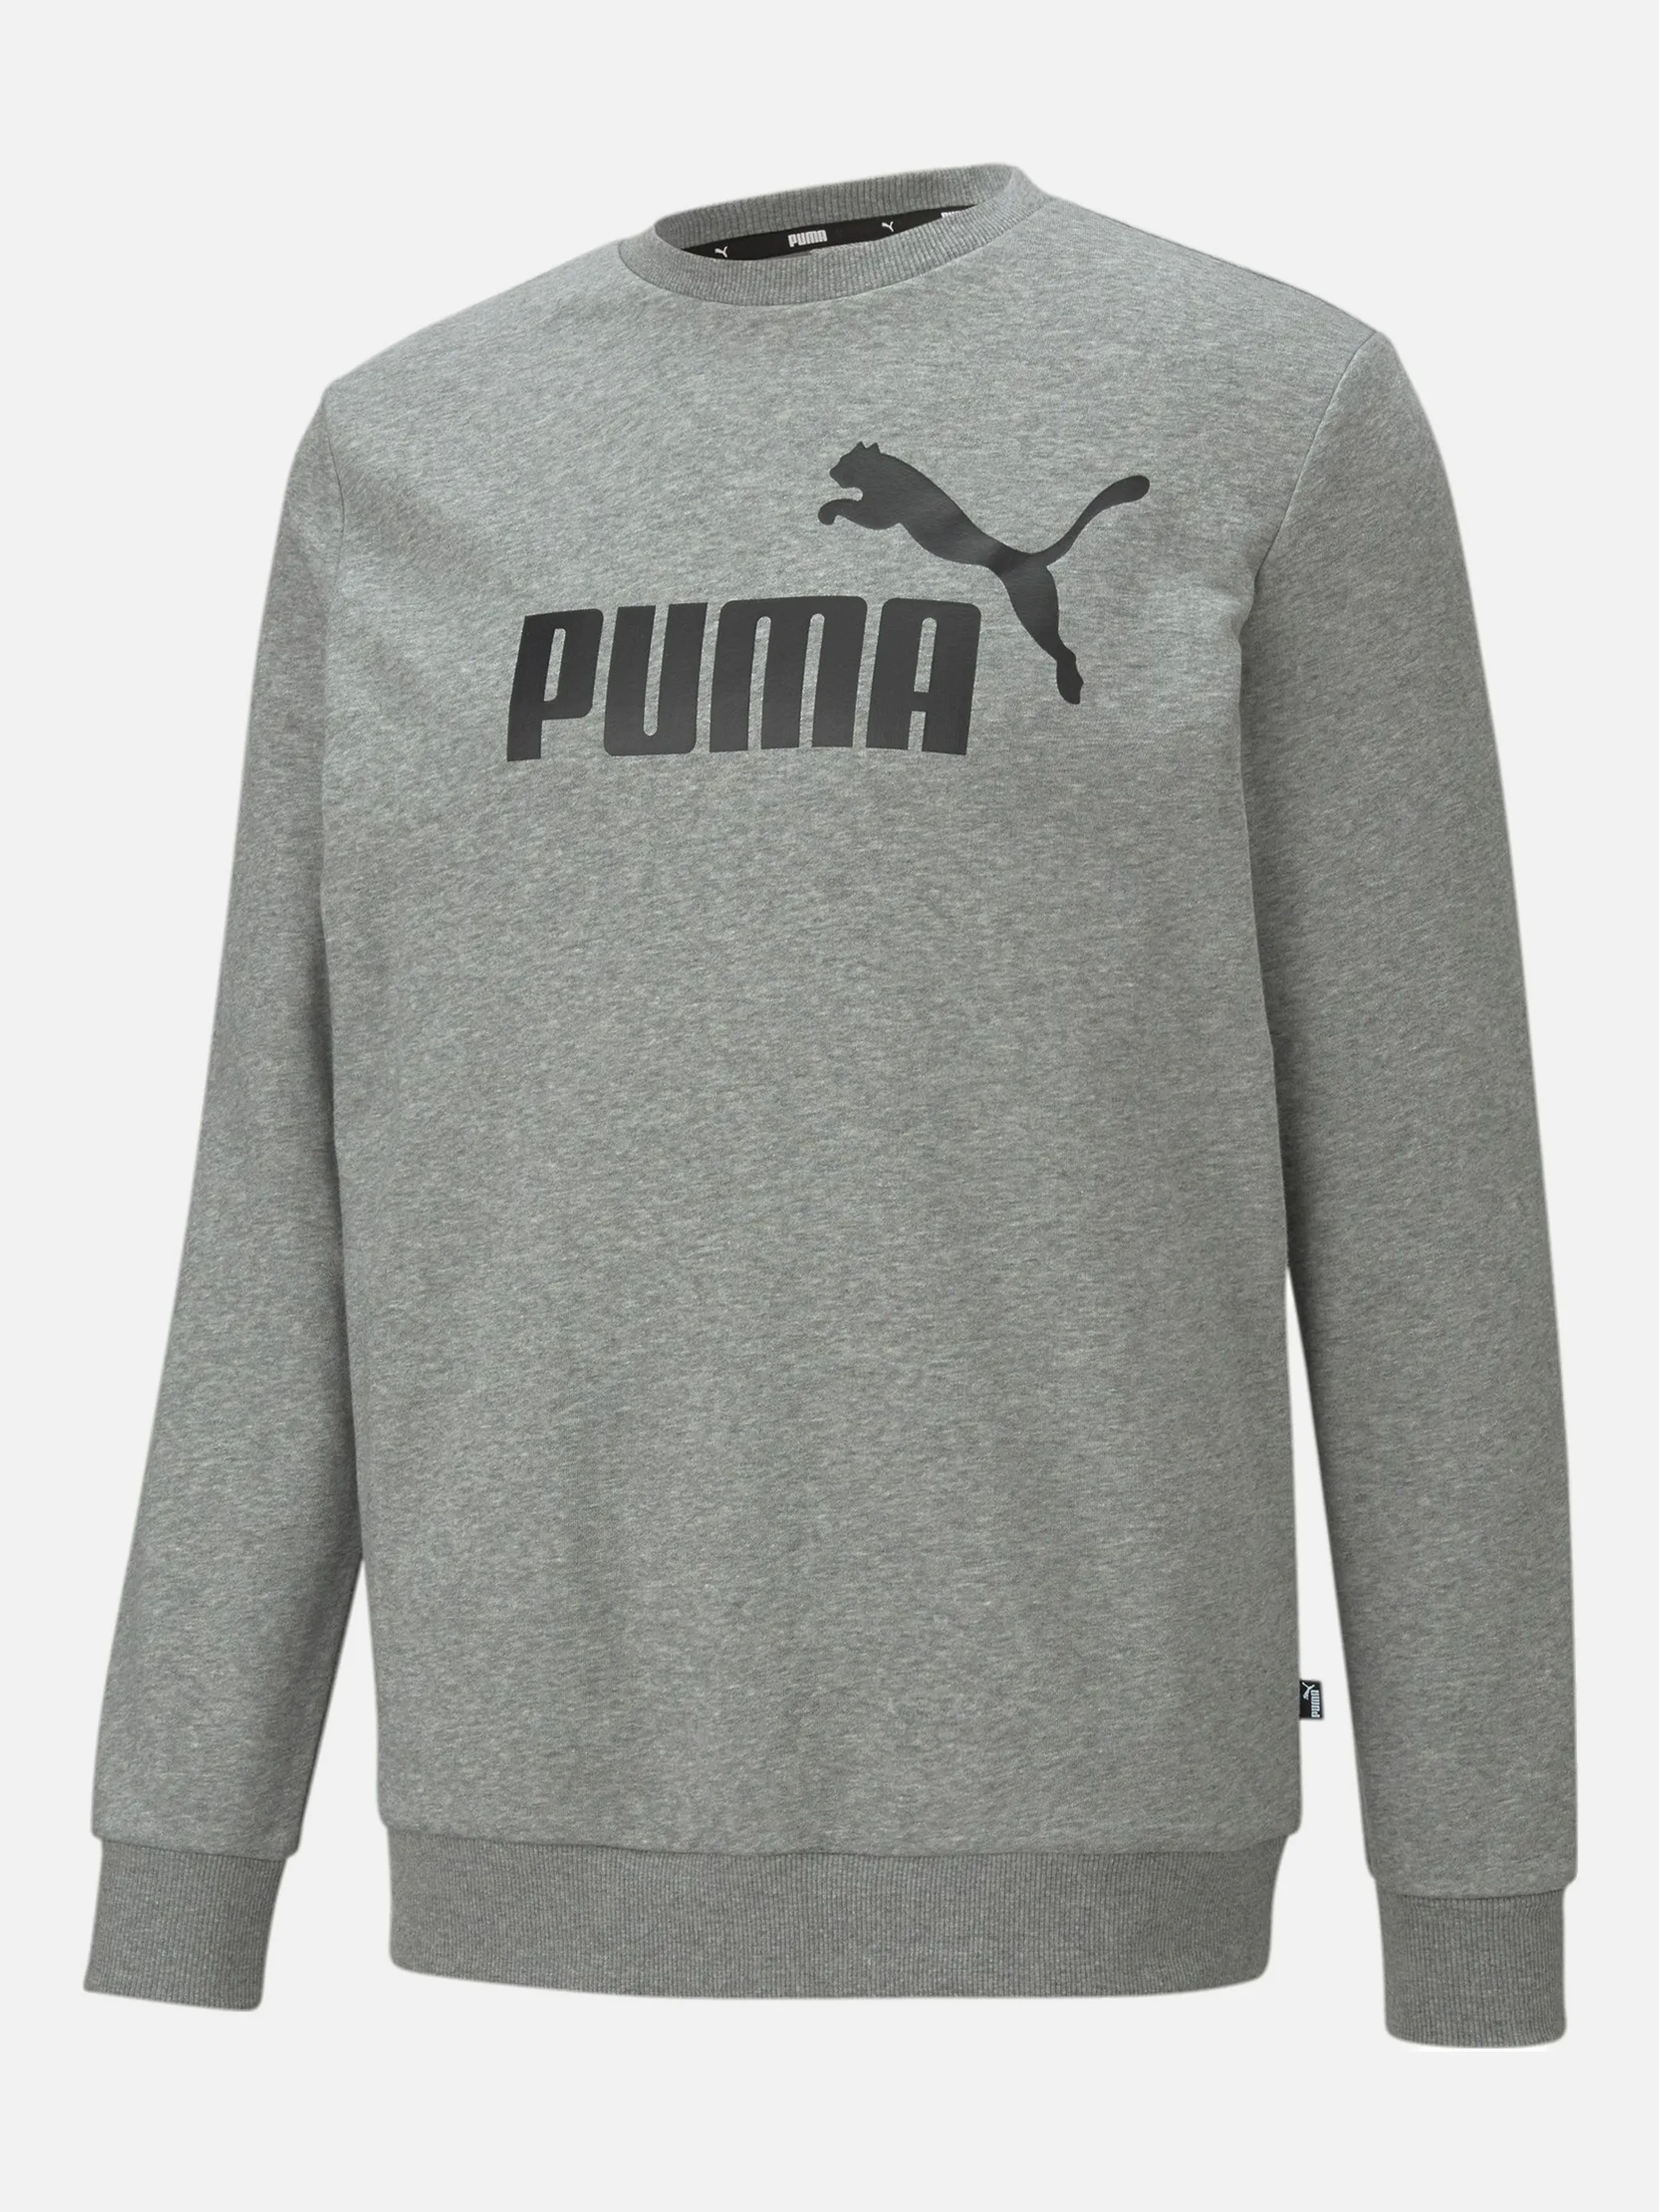 Puma 586680 He-Sweatshirt, Rundhals Grau 856657 03 1